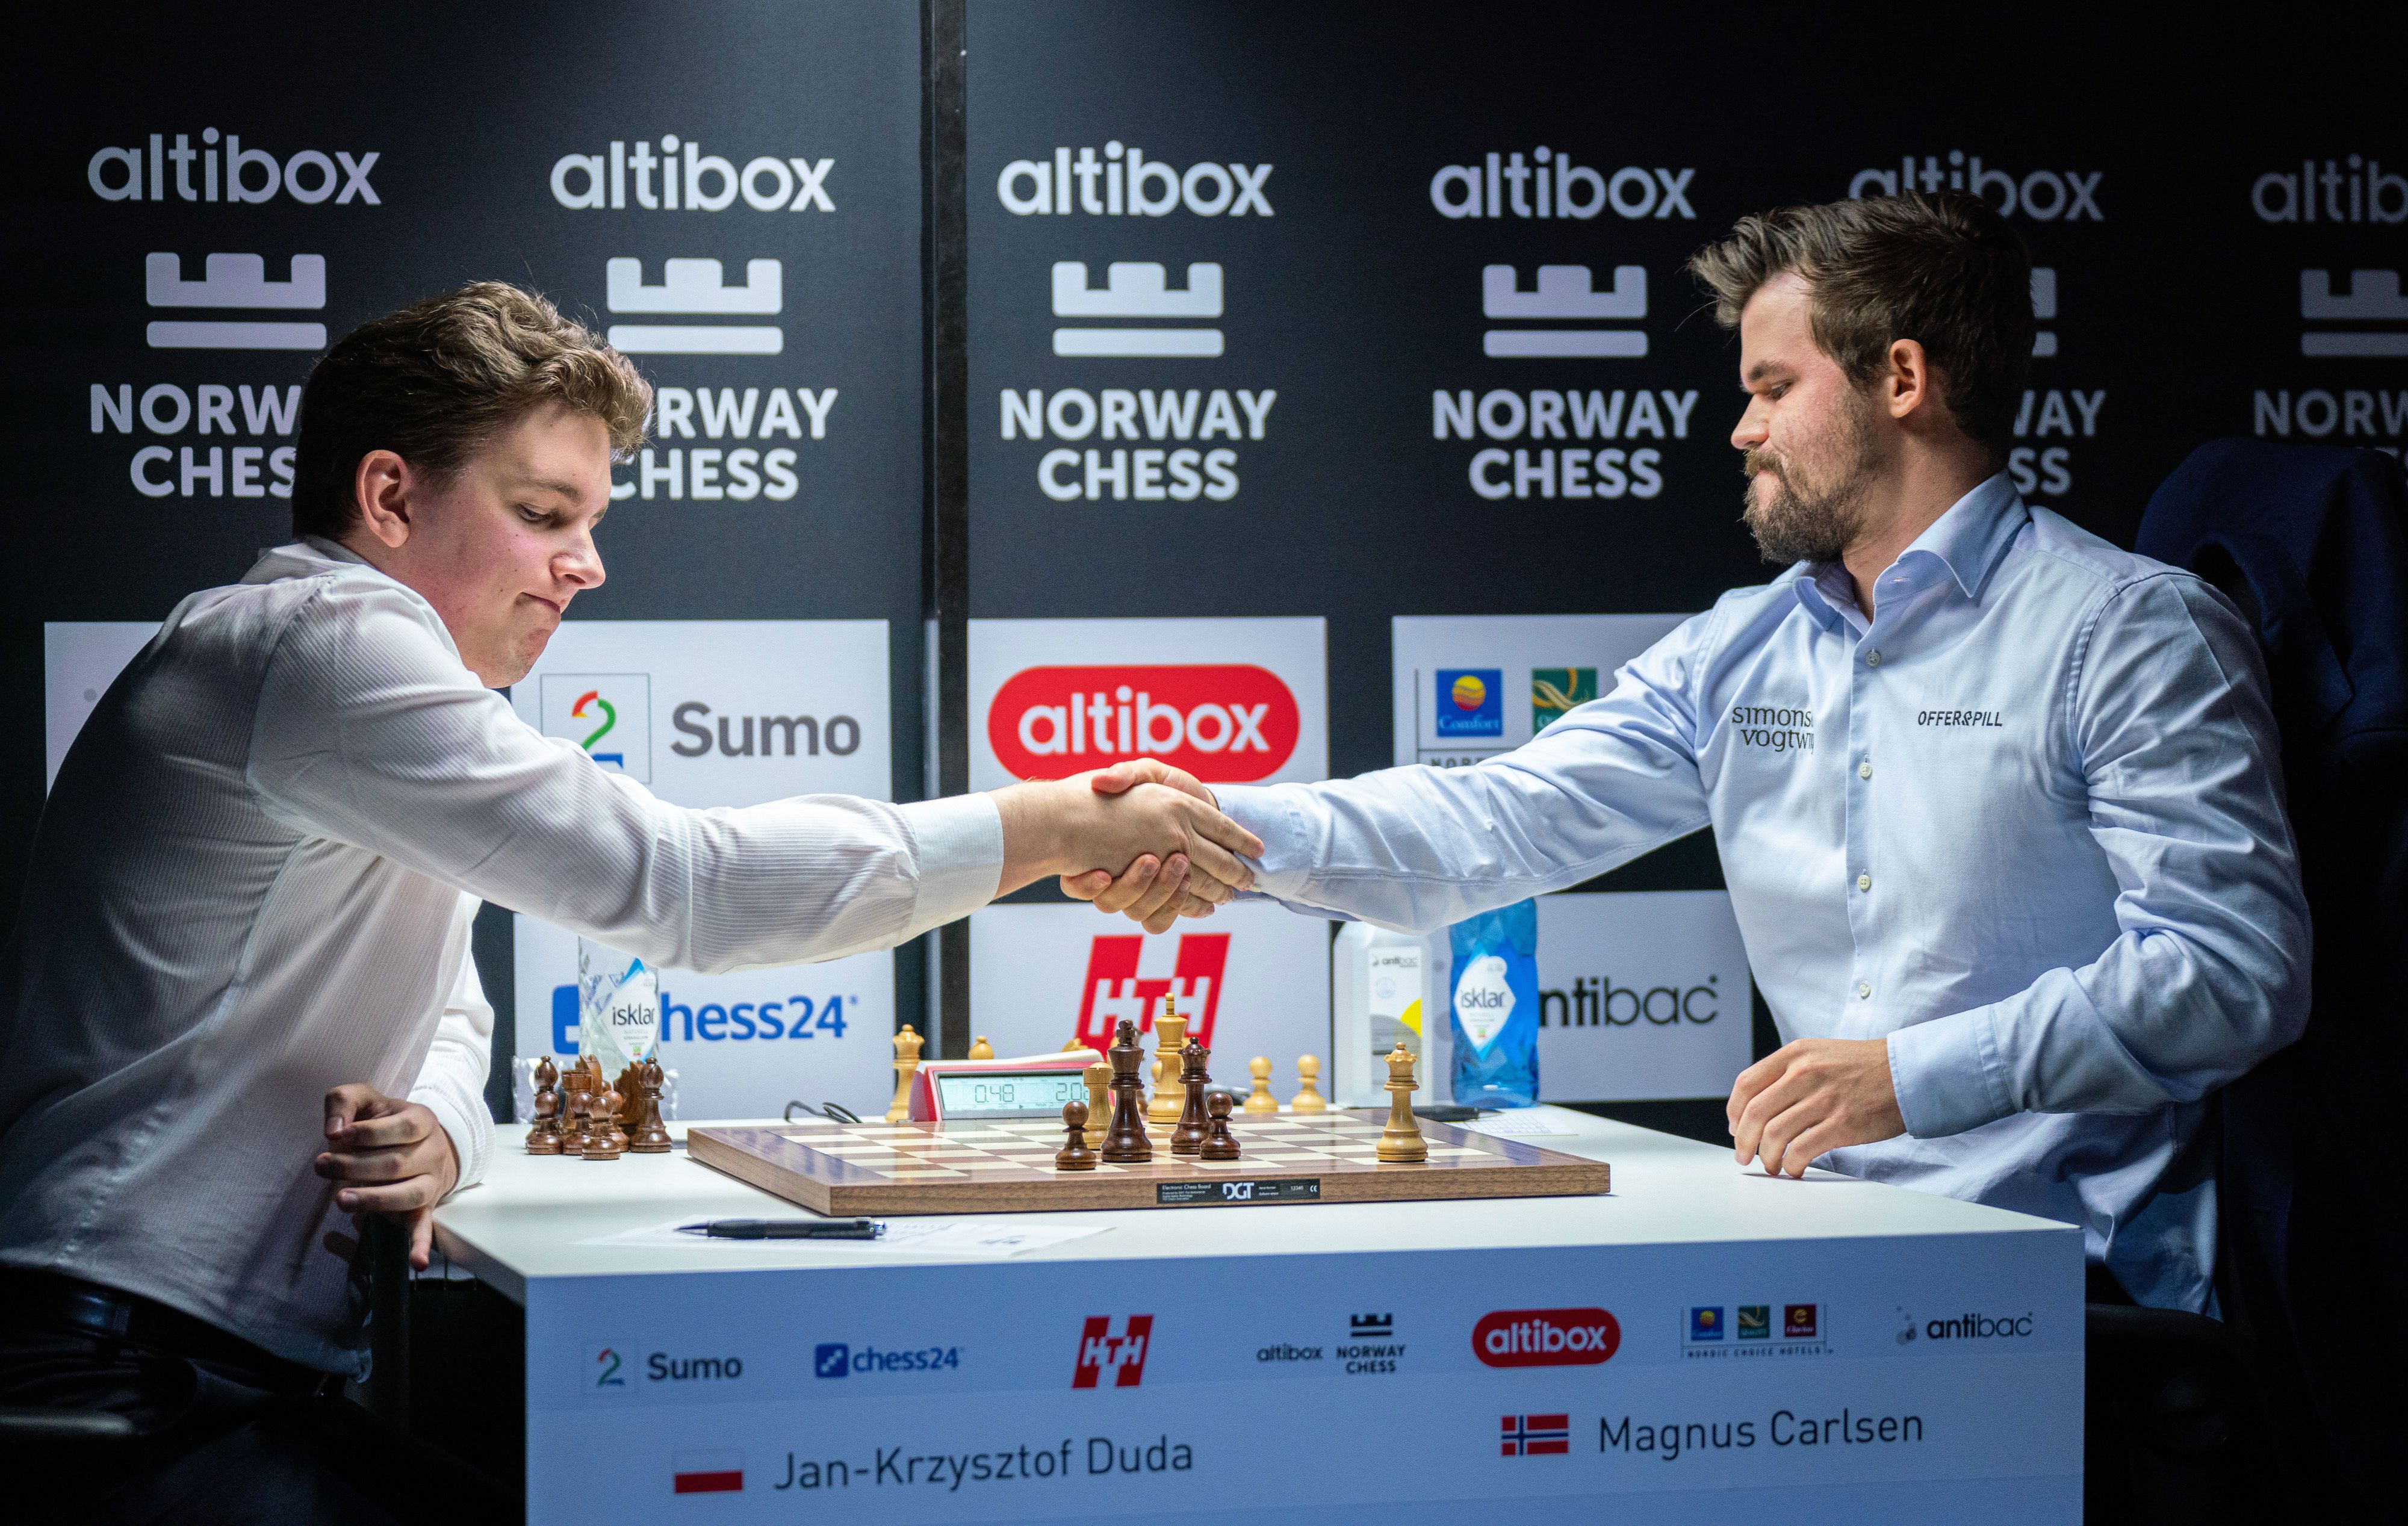 World Champion Magnus Carlsen wins chess24 Legends of Chess